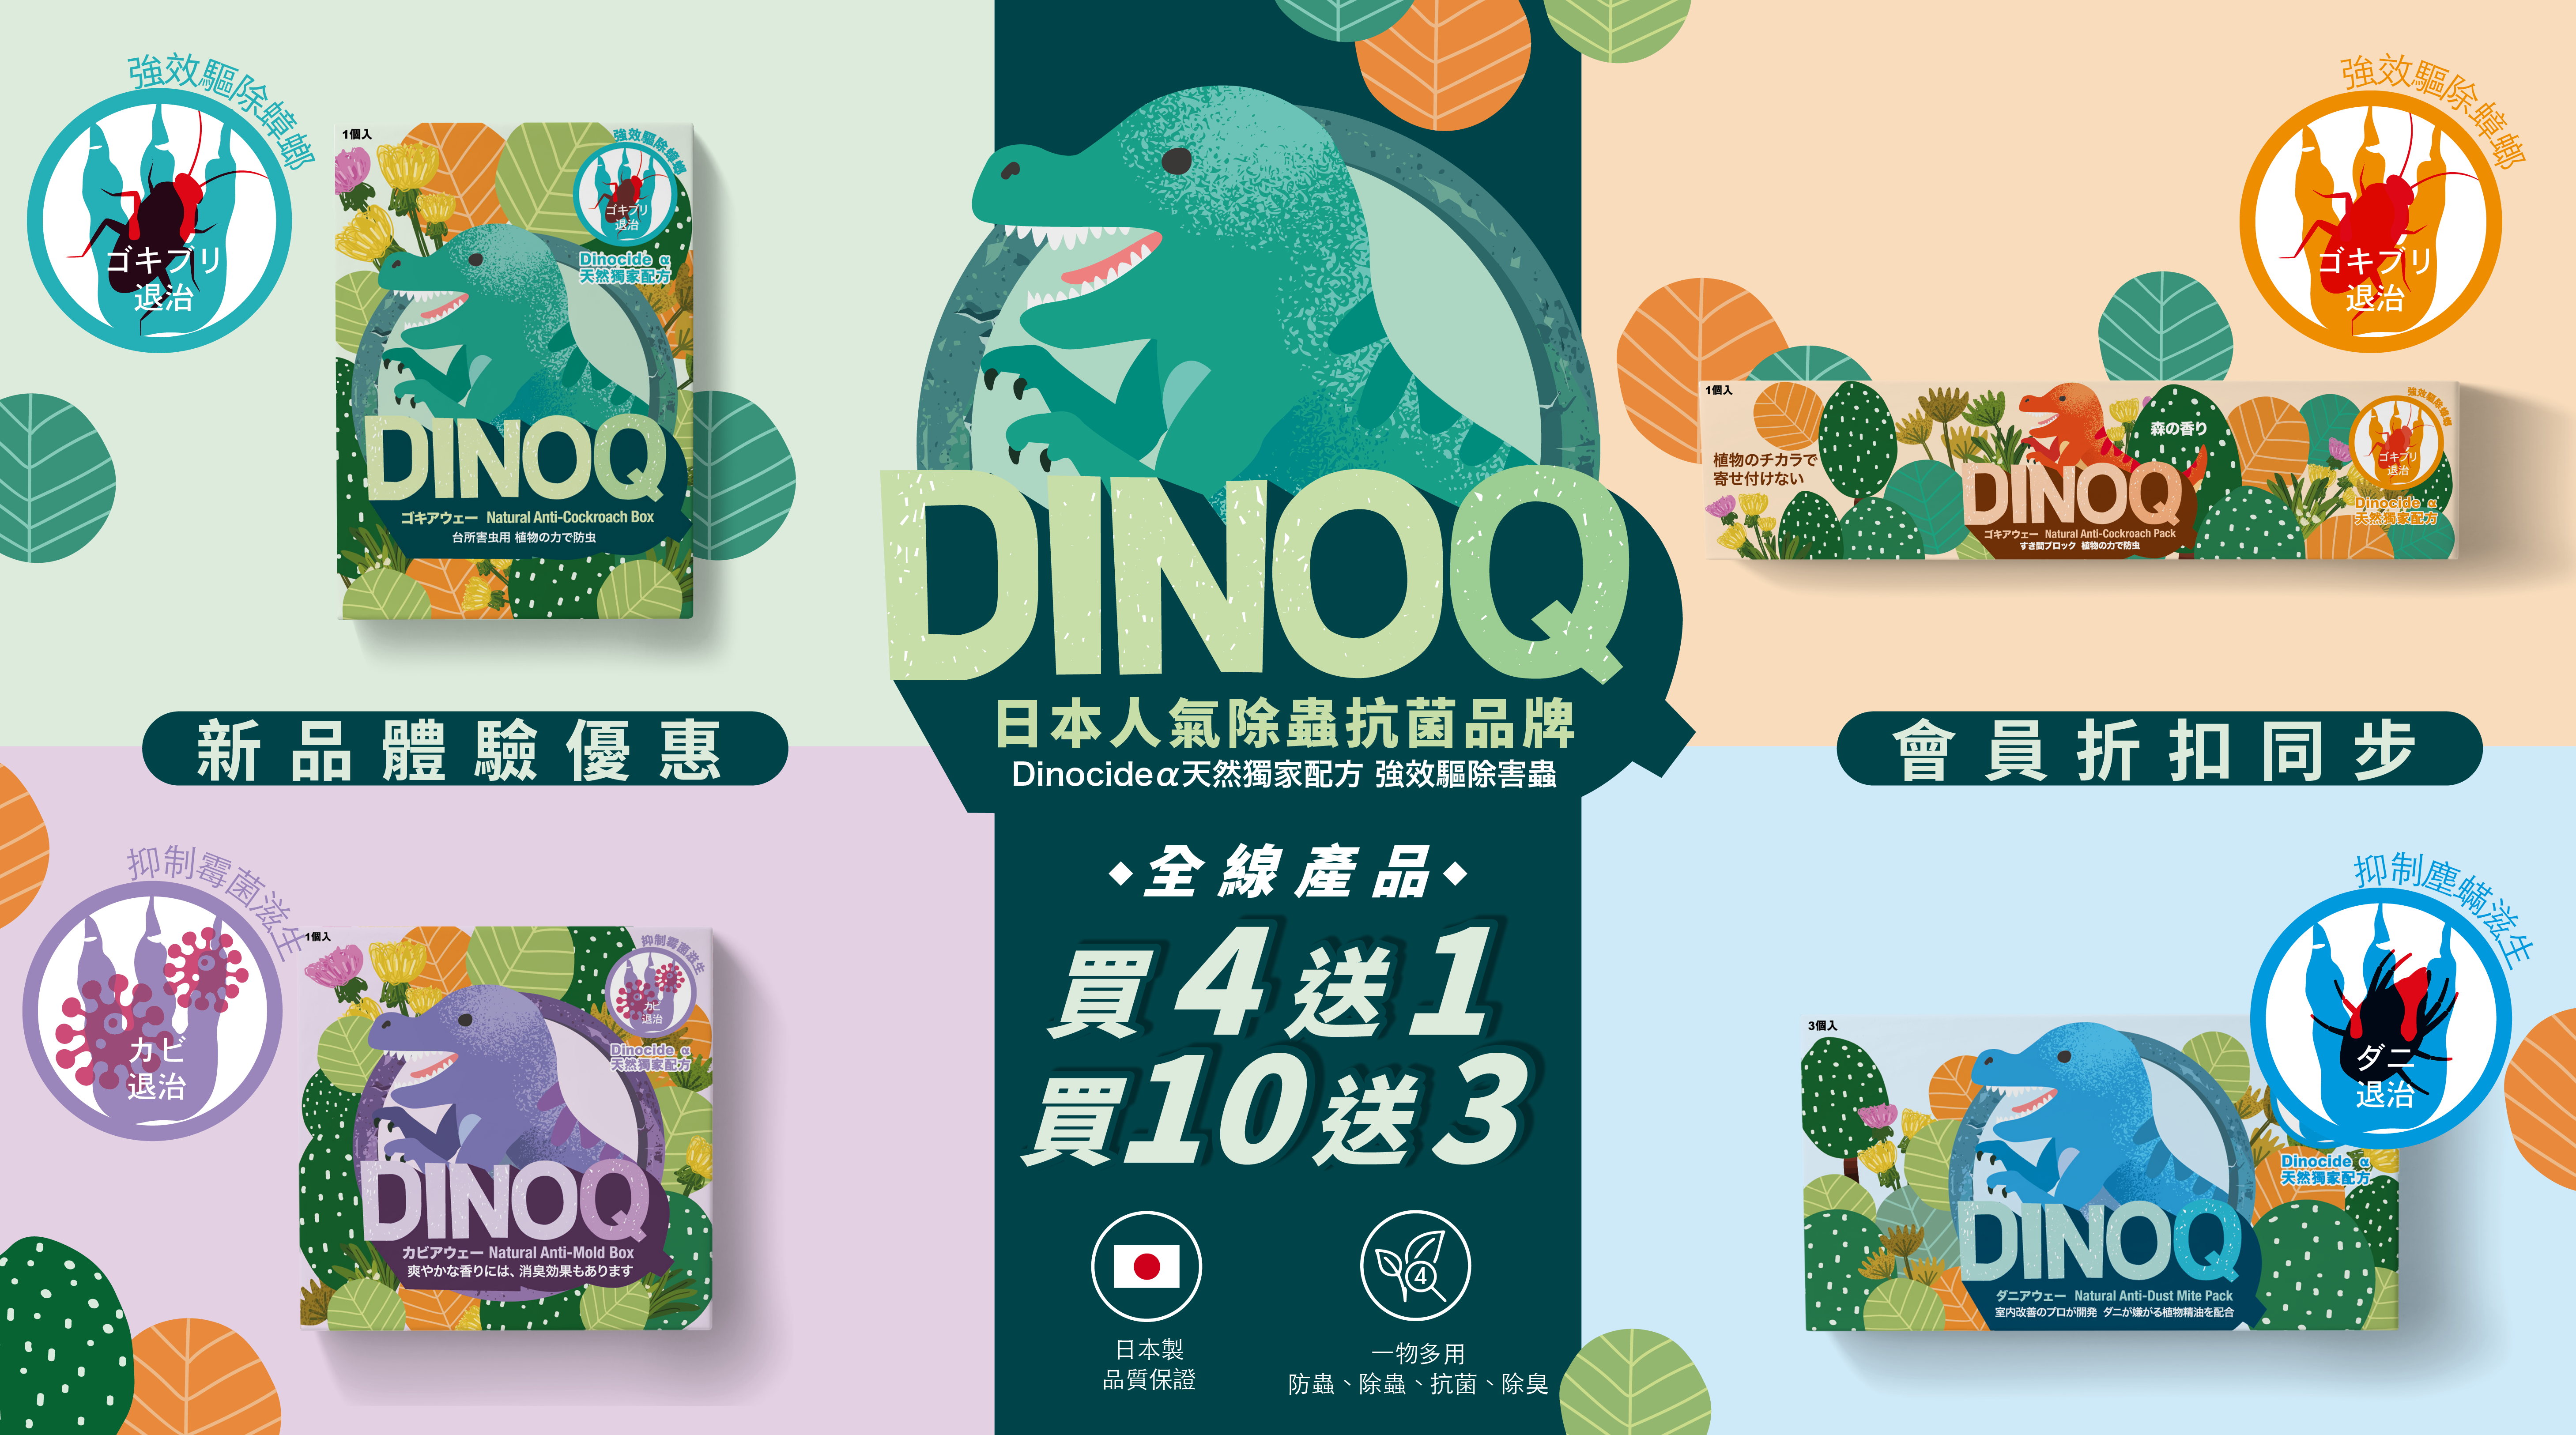 Sep DinoQ Sales 22-26